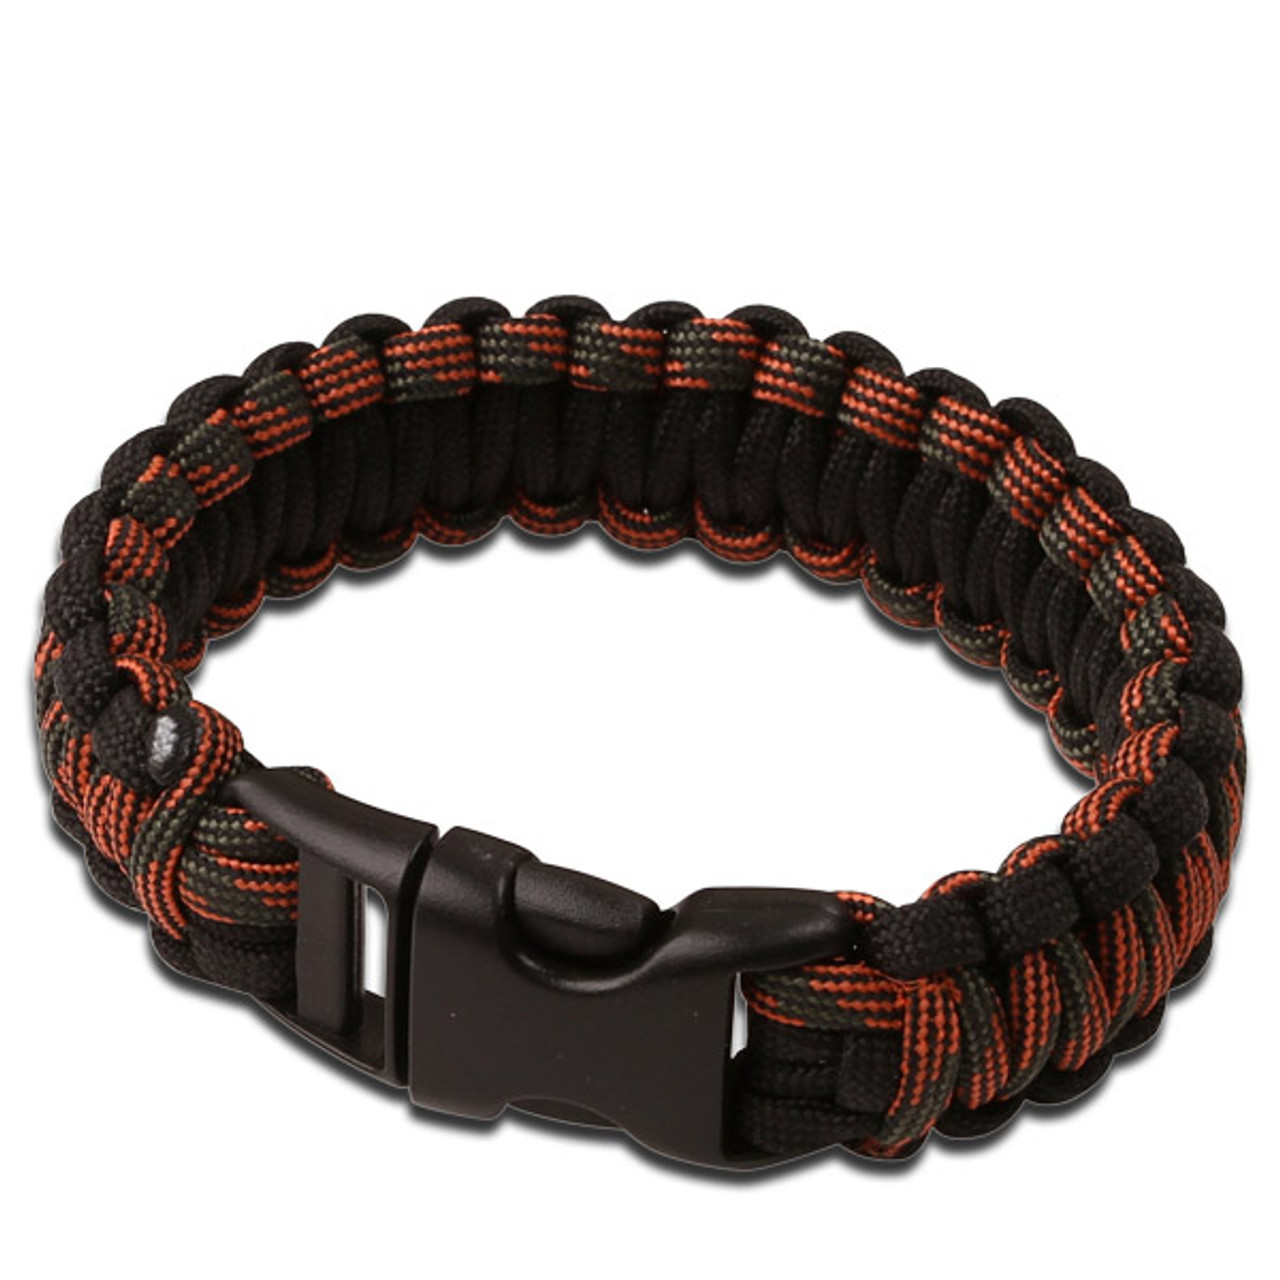 Survival Bracelet - 550 Paracord - Red - (7 inch)